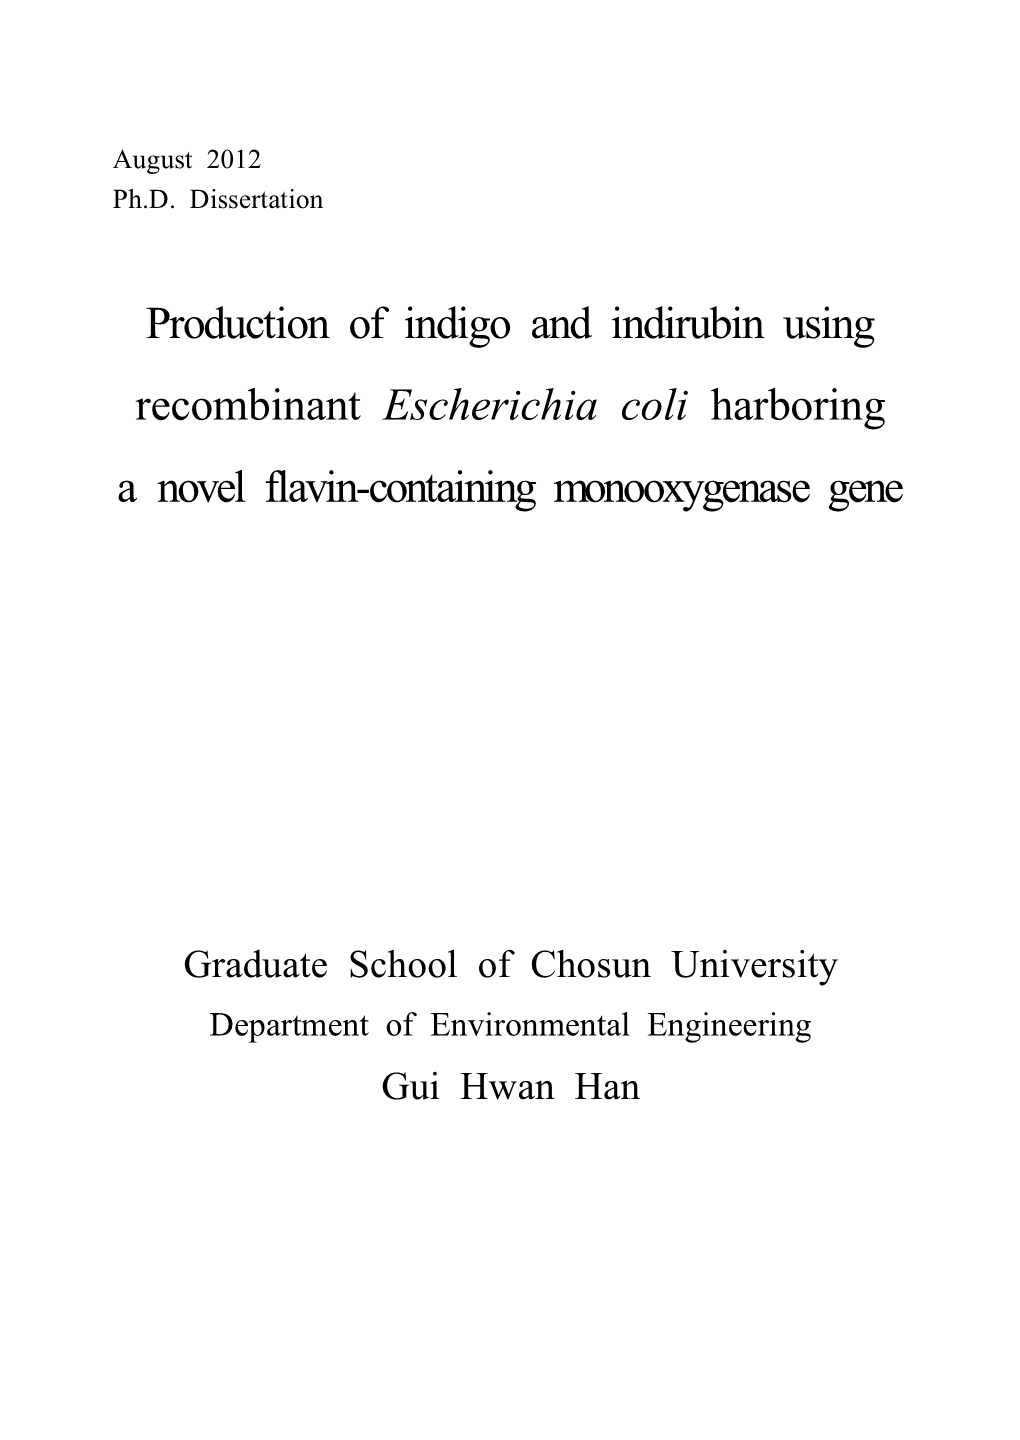 Production of Indigo and Indirubin Using Recombinant Escherichia Coli Harboring a Novel Flavin-Containing Monooxygenase Gene